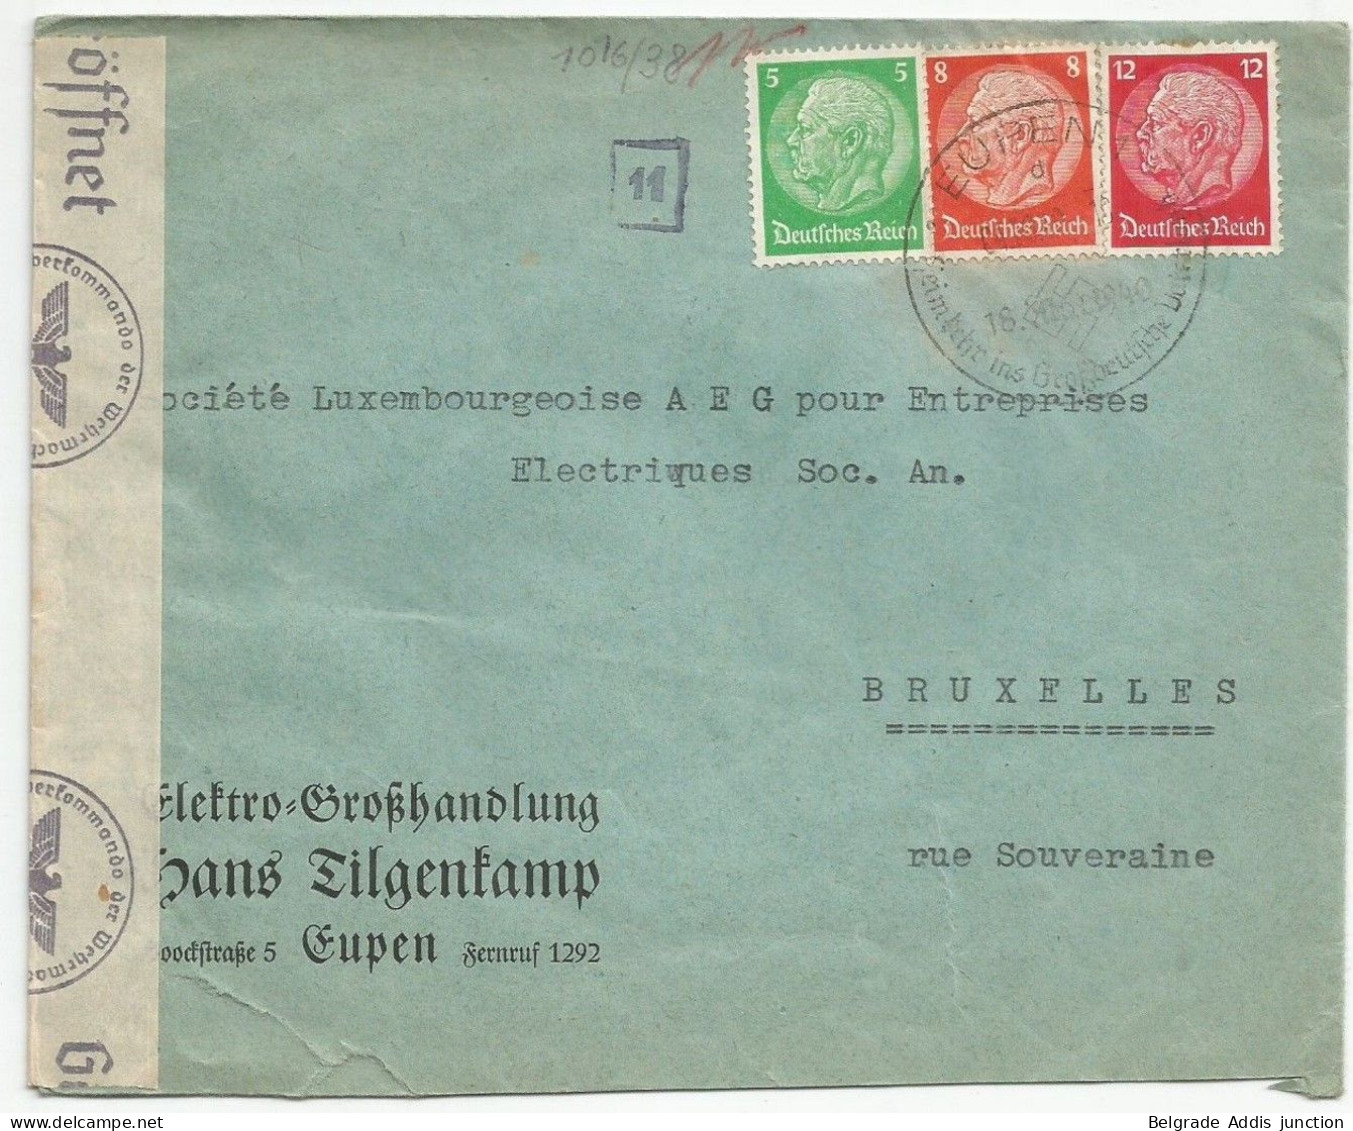 Belgique Belgien Occupation Eupen Deutsche Besetzung DR 1940 Lettre Censure Censored Cover - WW II (Covers & Documents)